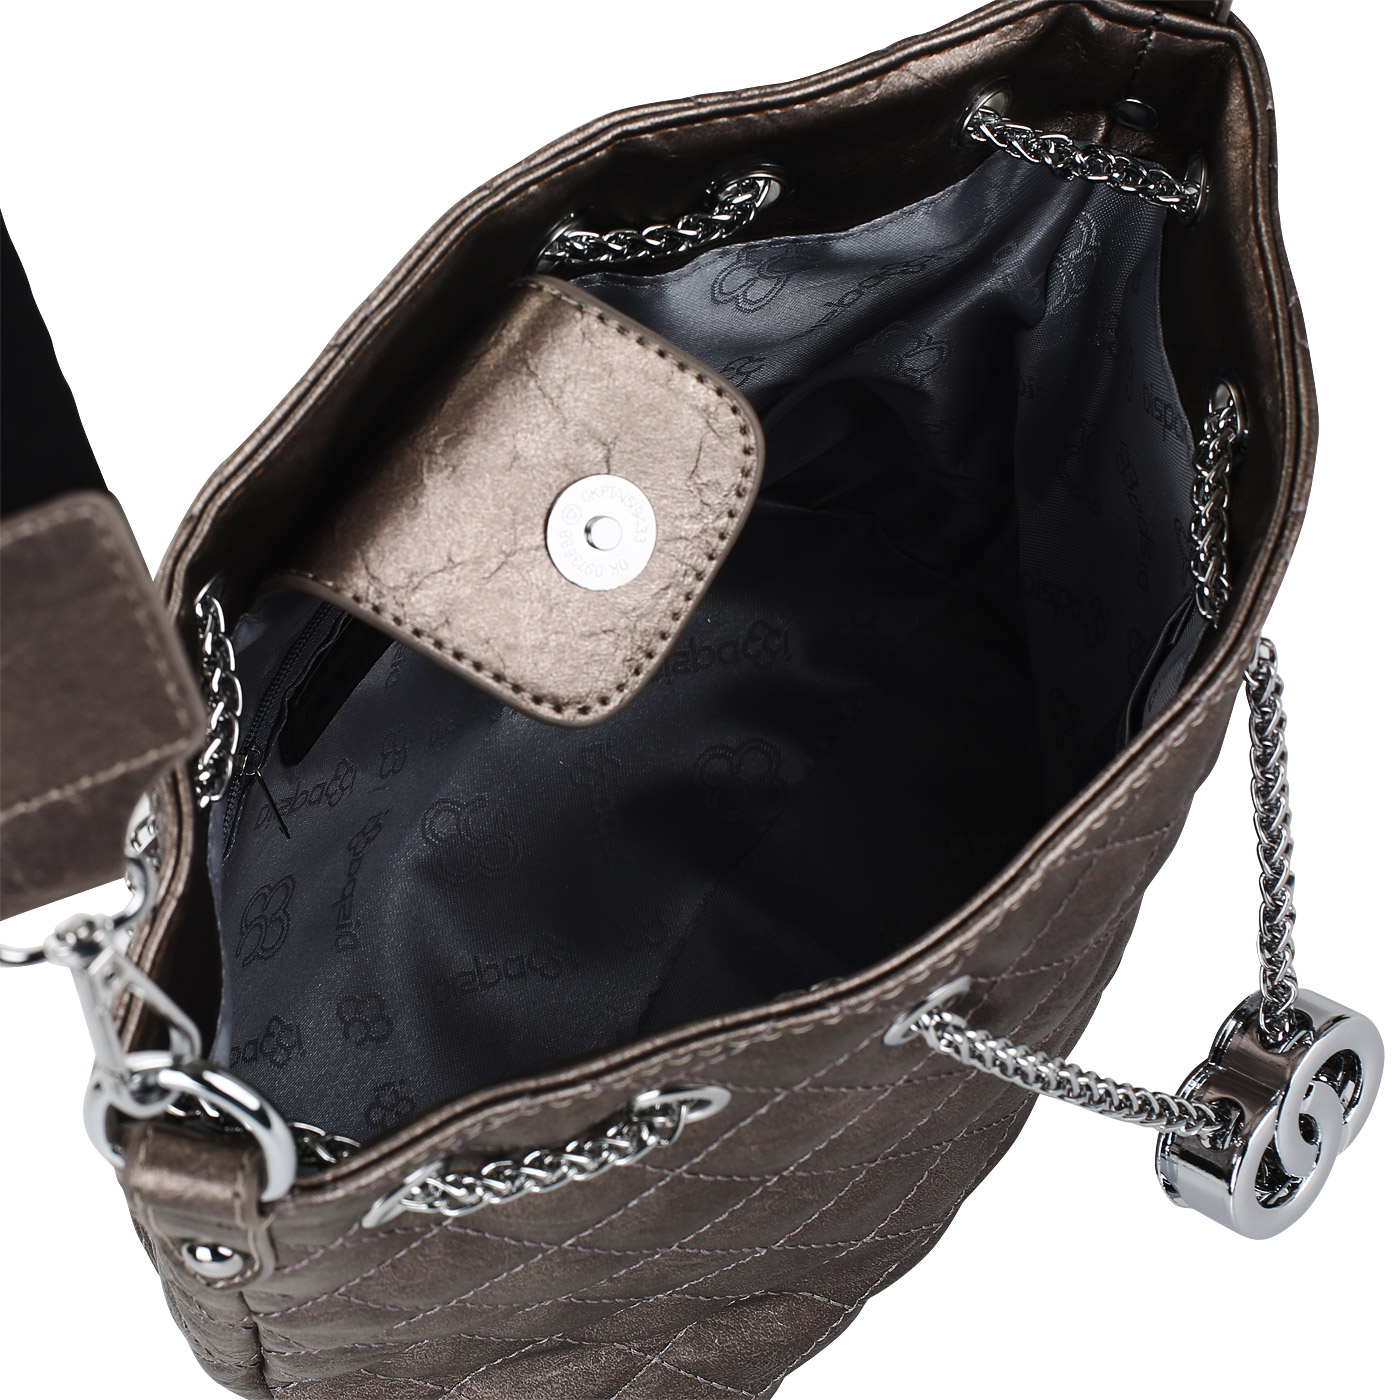 Сумка-торба со съемным плечевым ремешком Dispacci 